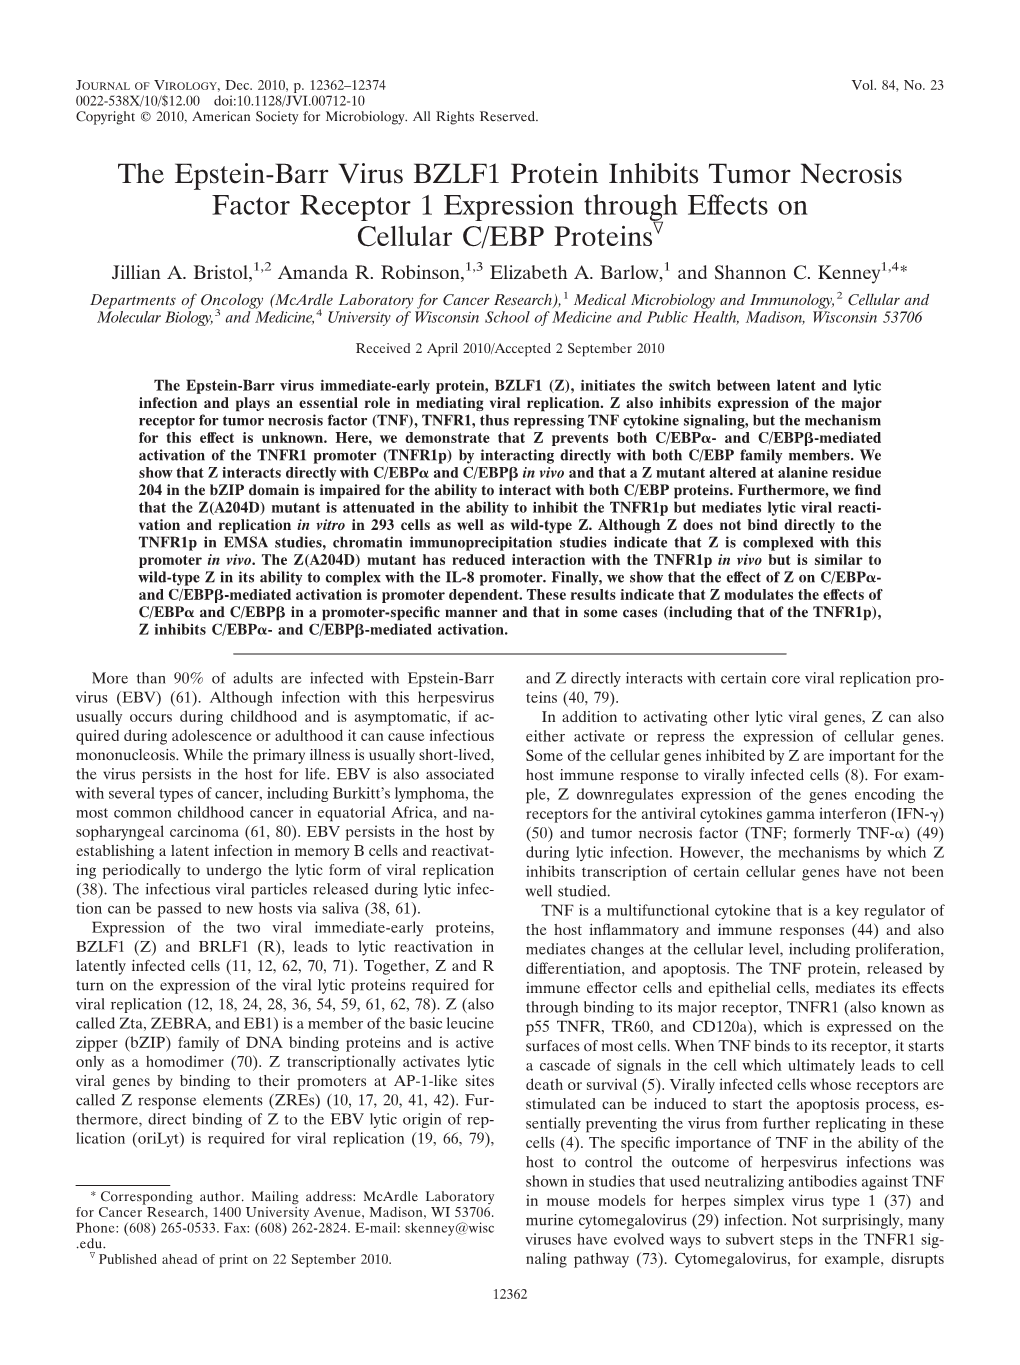 The Epstein-Barr Virus BZLF1 Protein Inhibits Tumor Necrosis Factor Receptor 1 Expression Through Effects on Cellular C/EBP Proteinsᰔ Jillian A